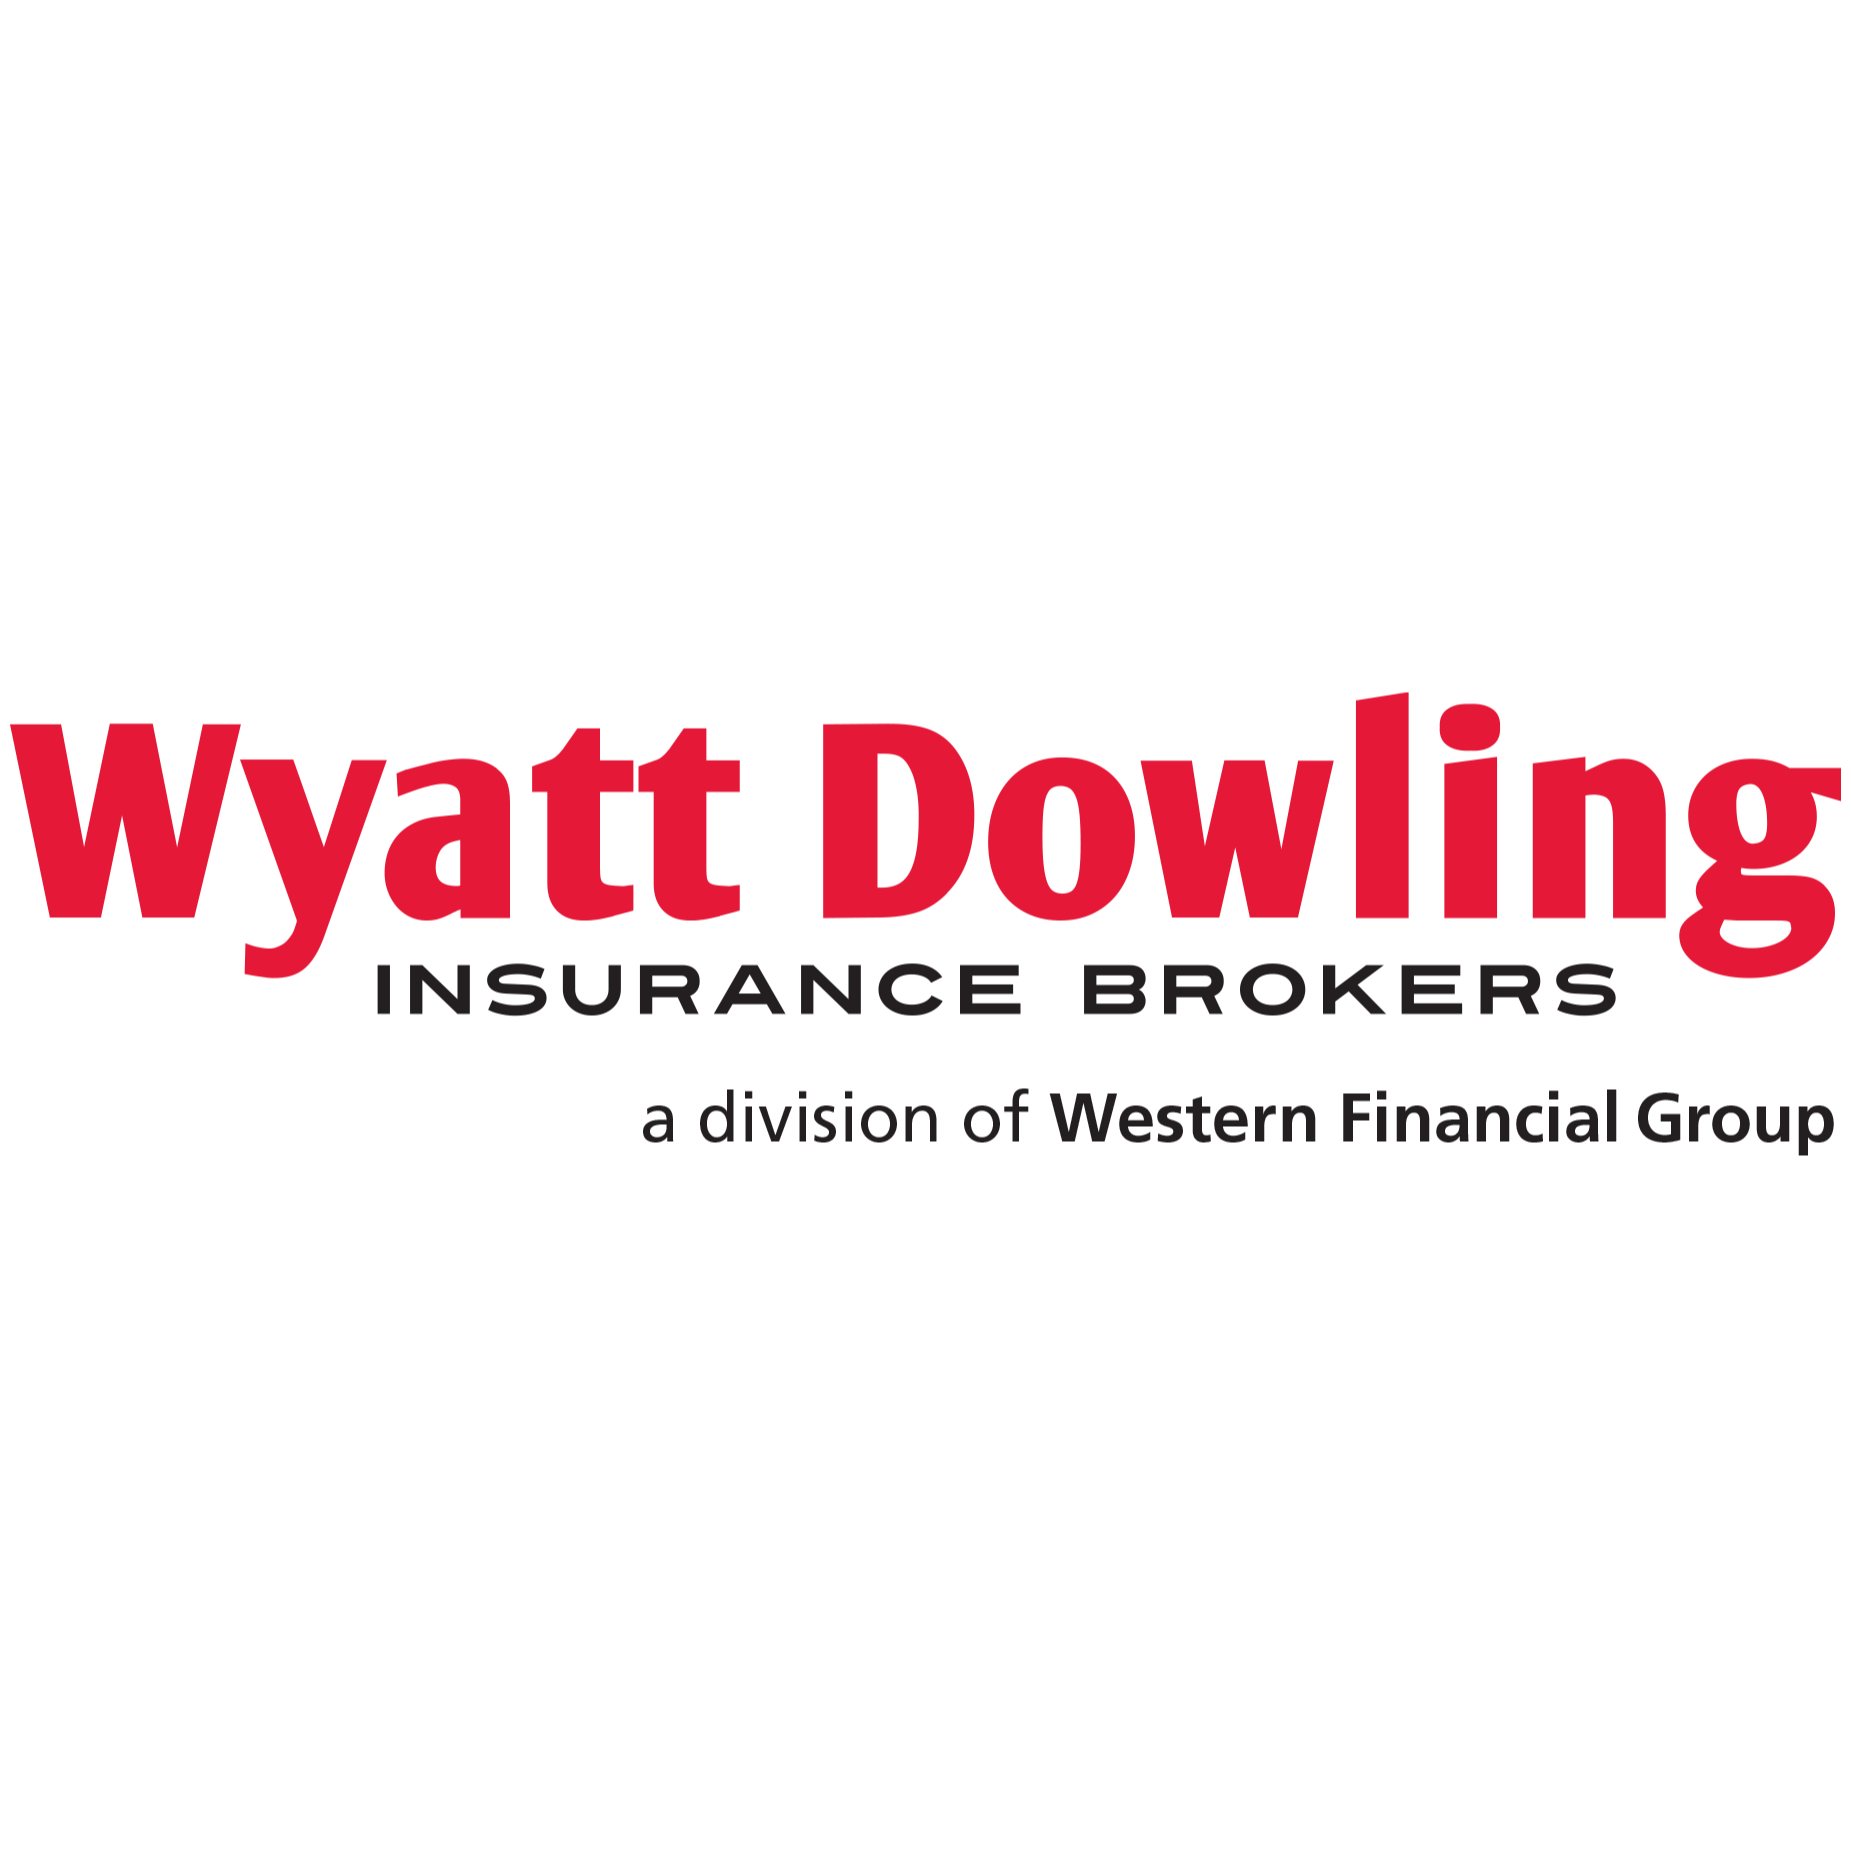 Wyatt Dowling Insurance Brokers - Insurance Agents